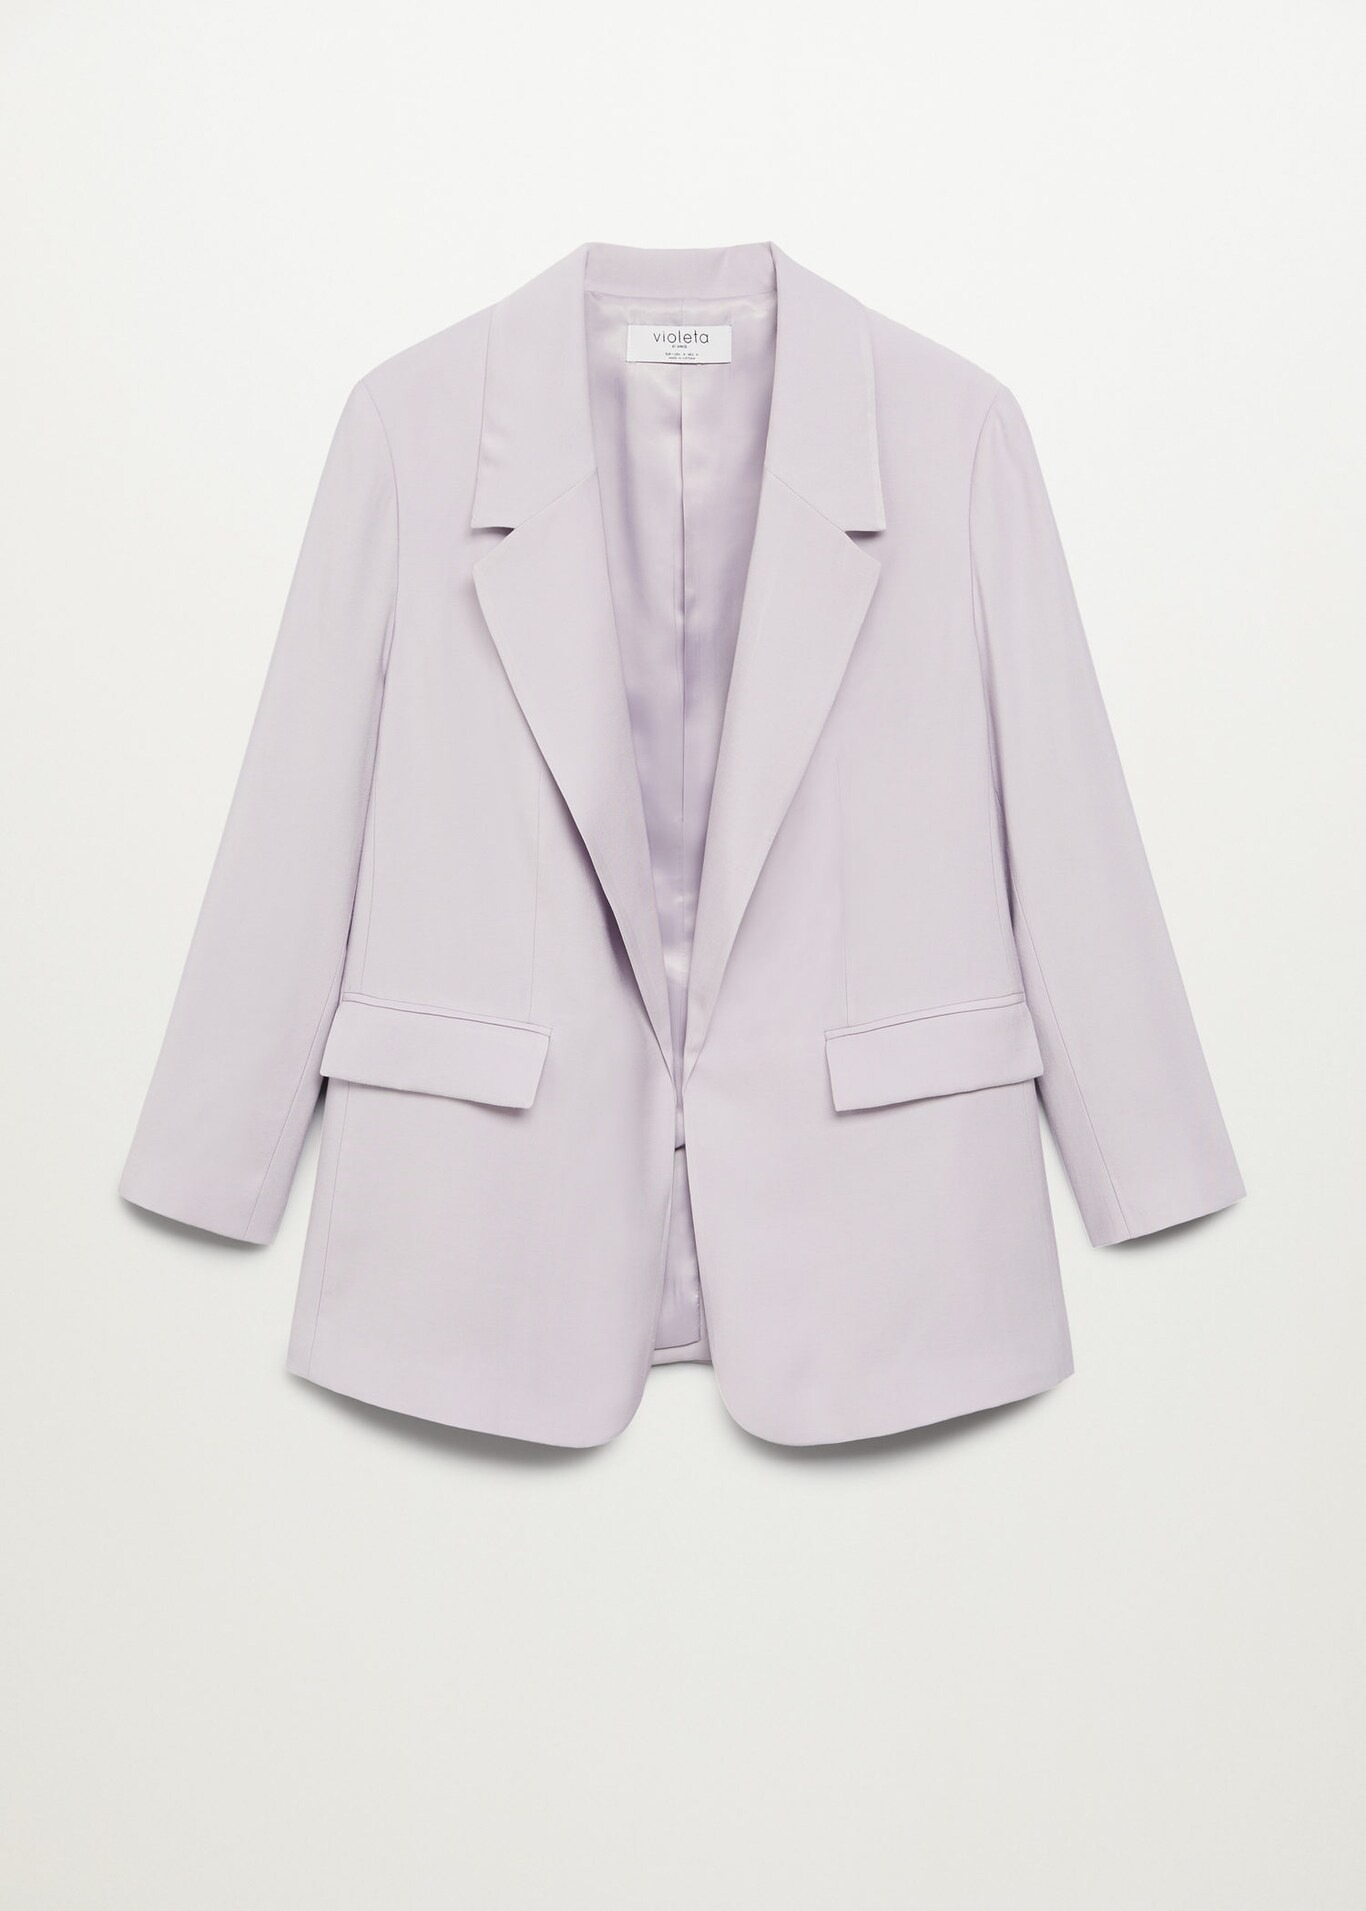 Mango 87044029 Patterned suit blazer Lilac size M